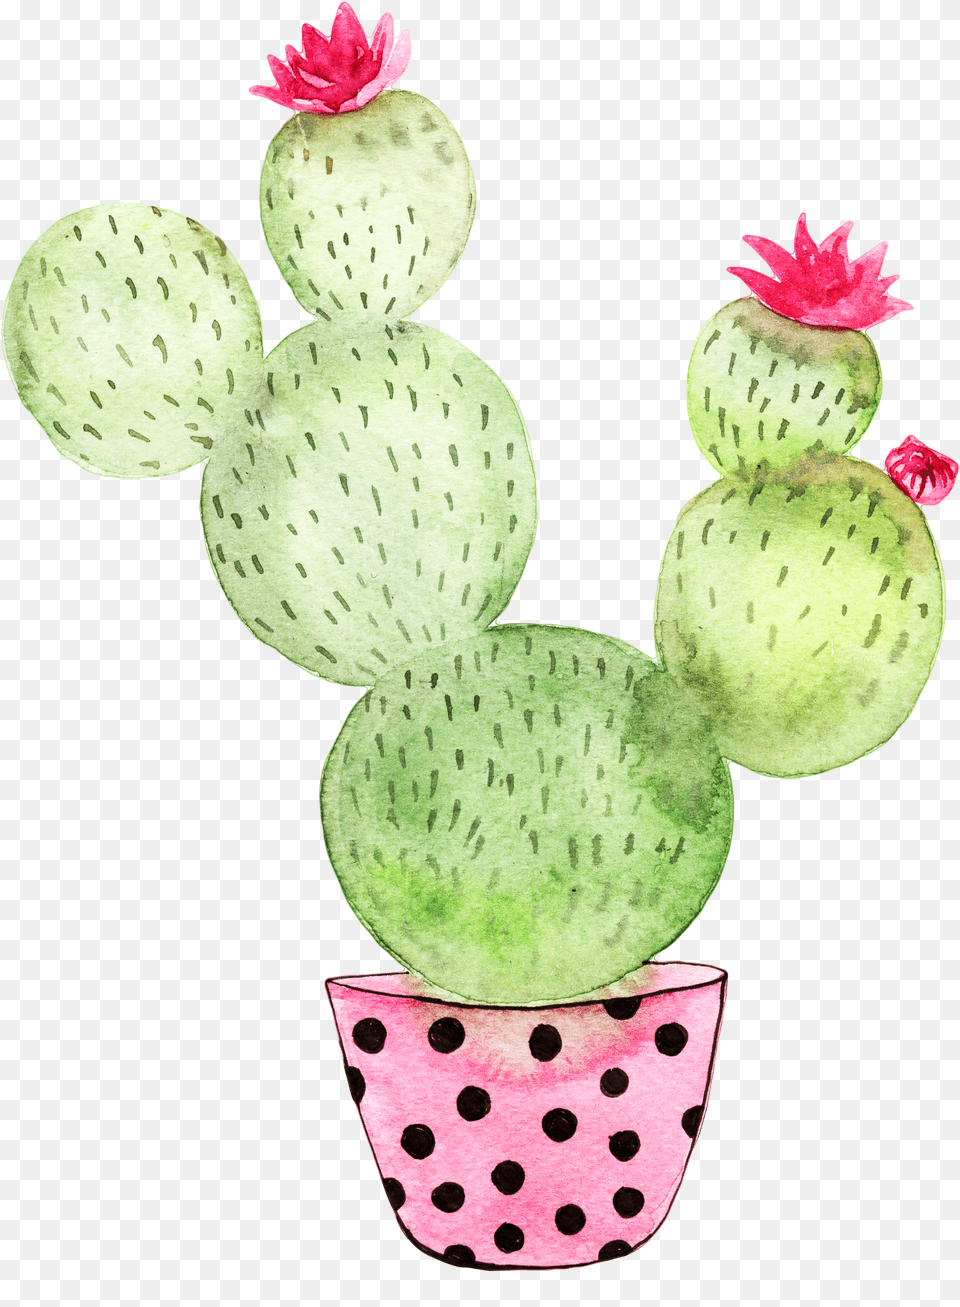 Cactus, Plant, Food, Fruit, Produce Png Image